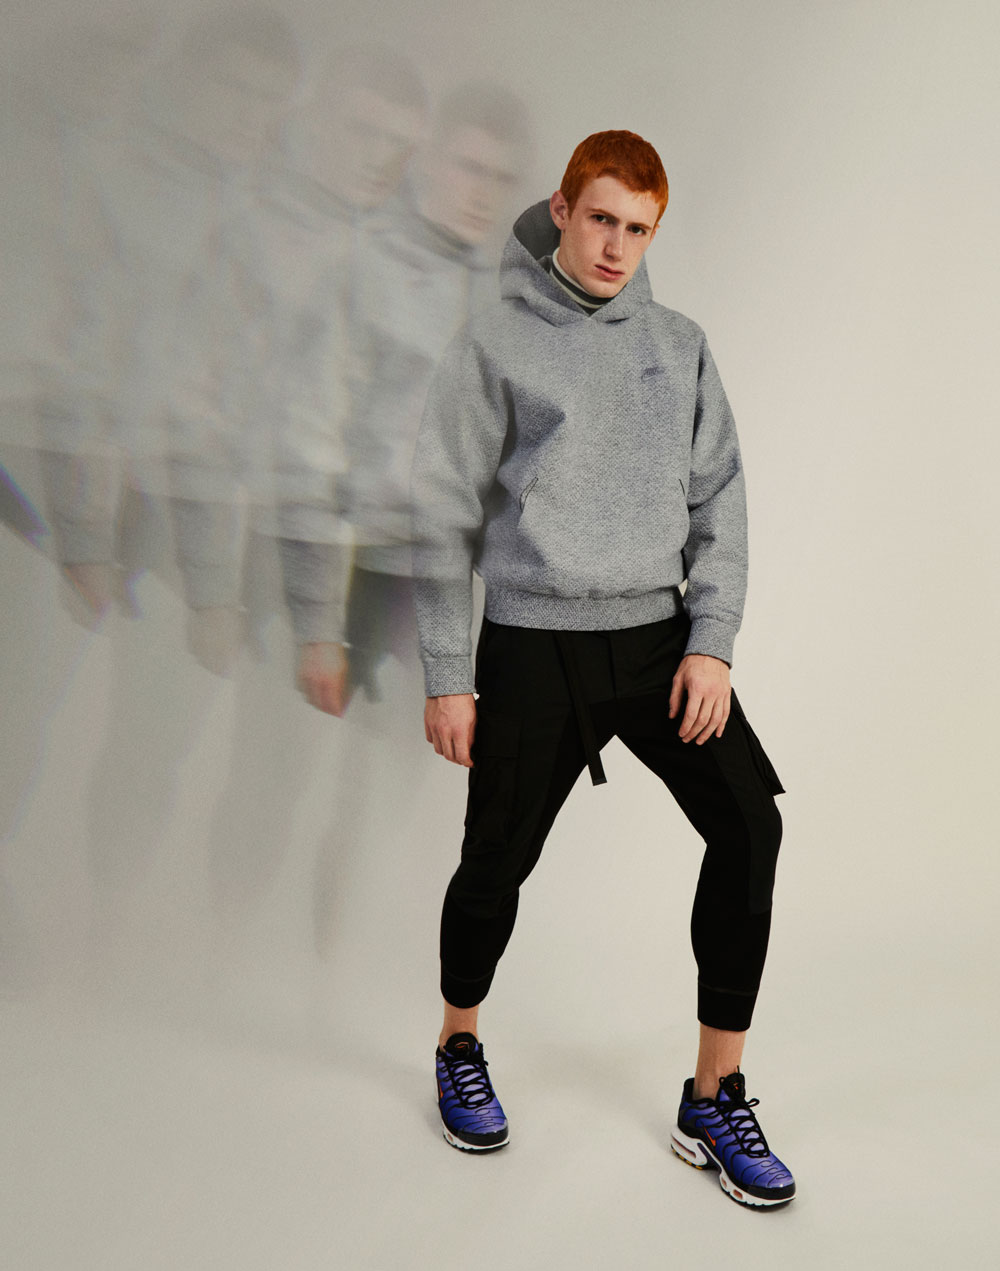 El nuevo material textil sostenible: Nike Forward